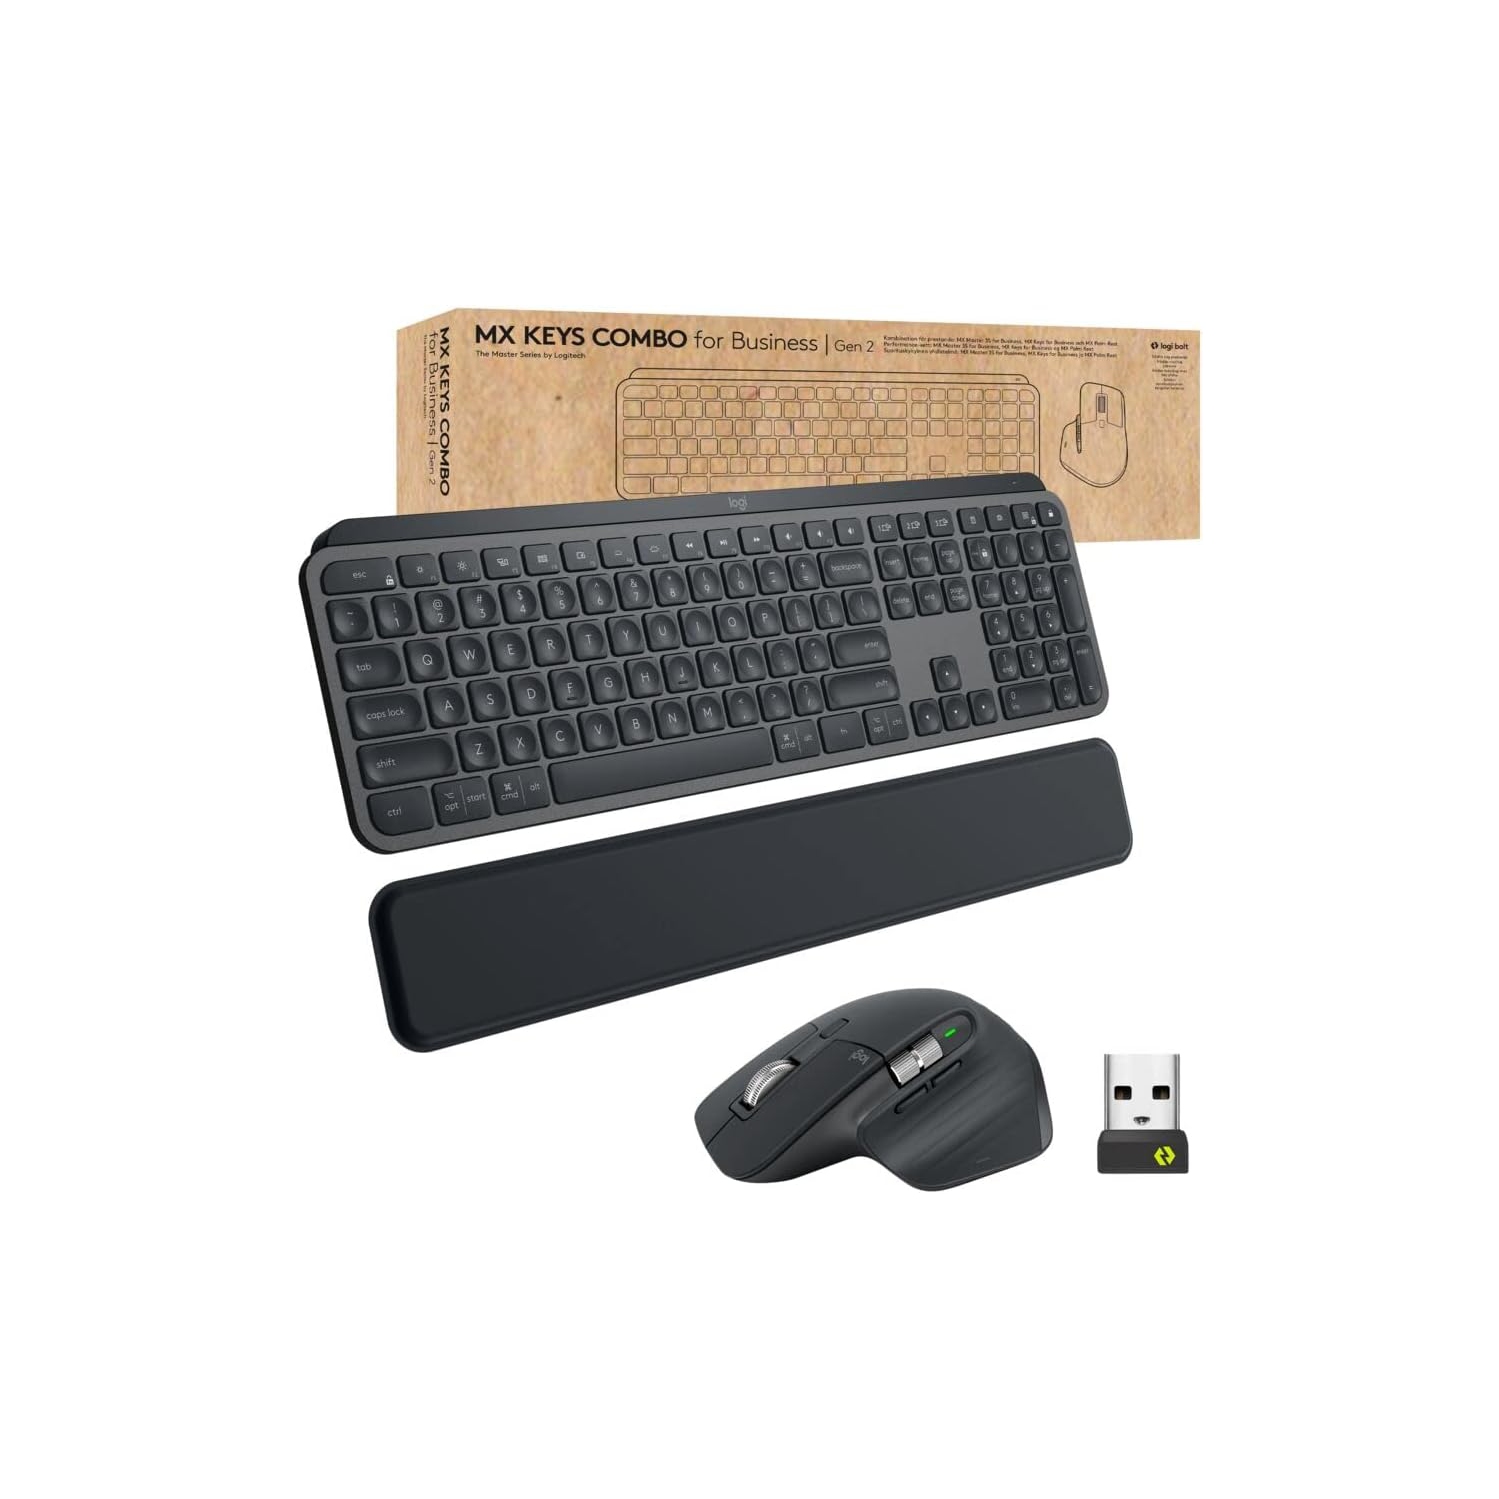 Logitech MX Keys Combo for Business/Gen 2 - Full Size Wireless Keyboard, Mouse and Palm Rest - Bluetooth, Logi Bolt, Quiet Clicks, Windows/Mac/Chrome/Linux - Graphite